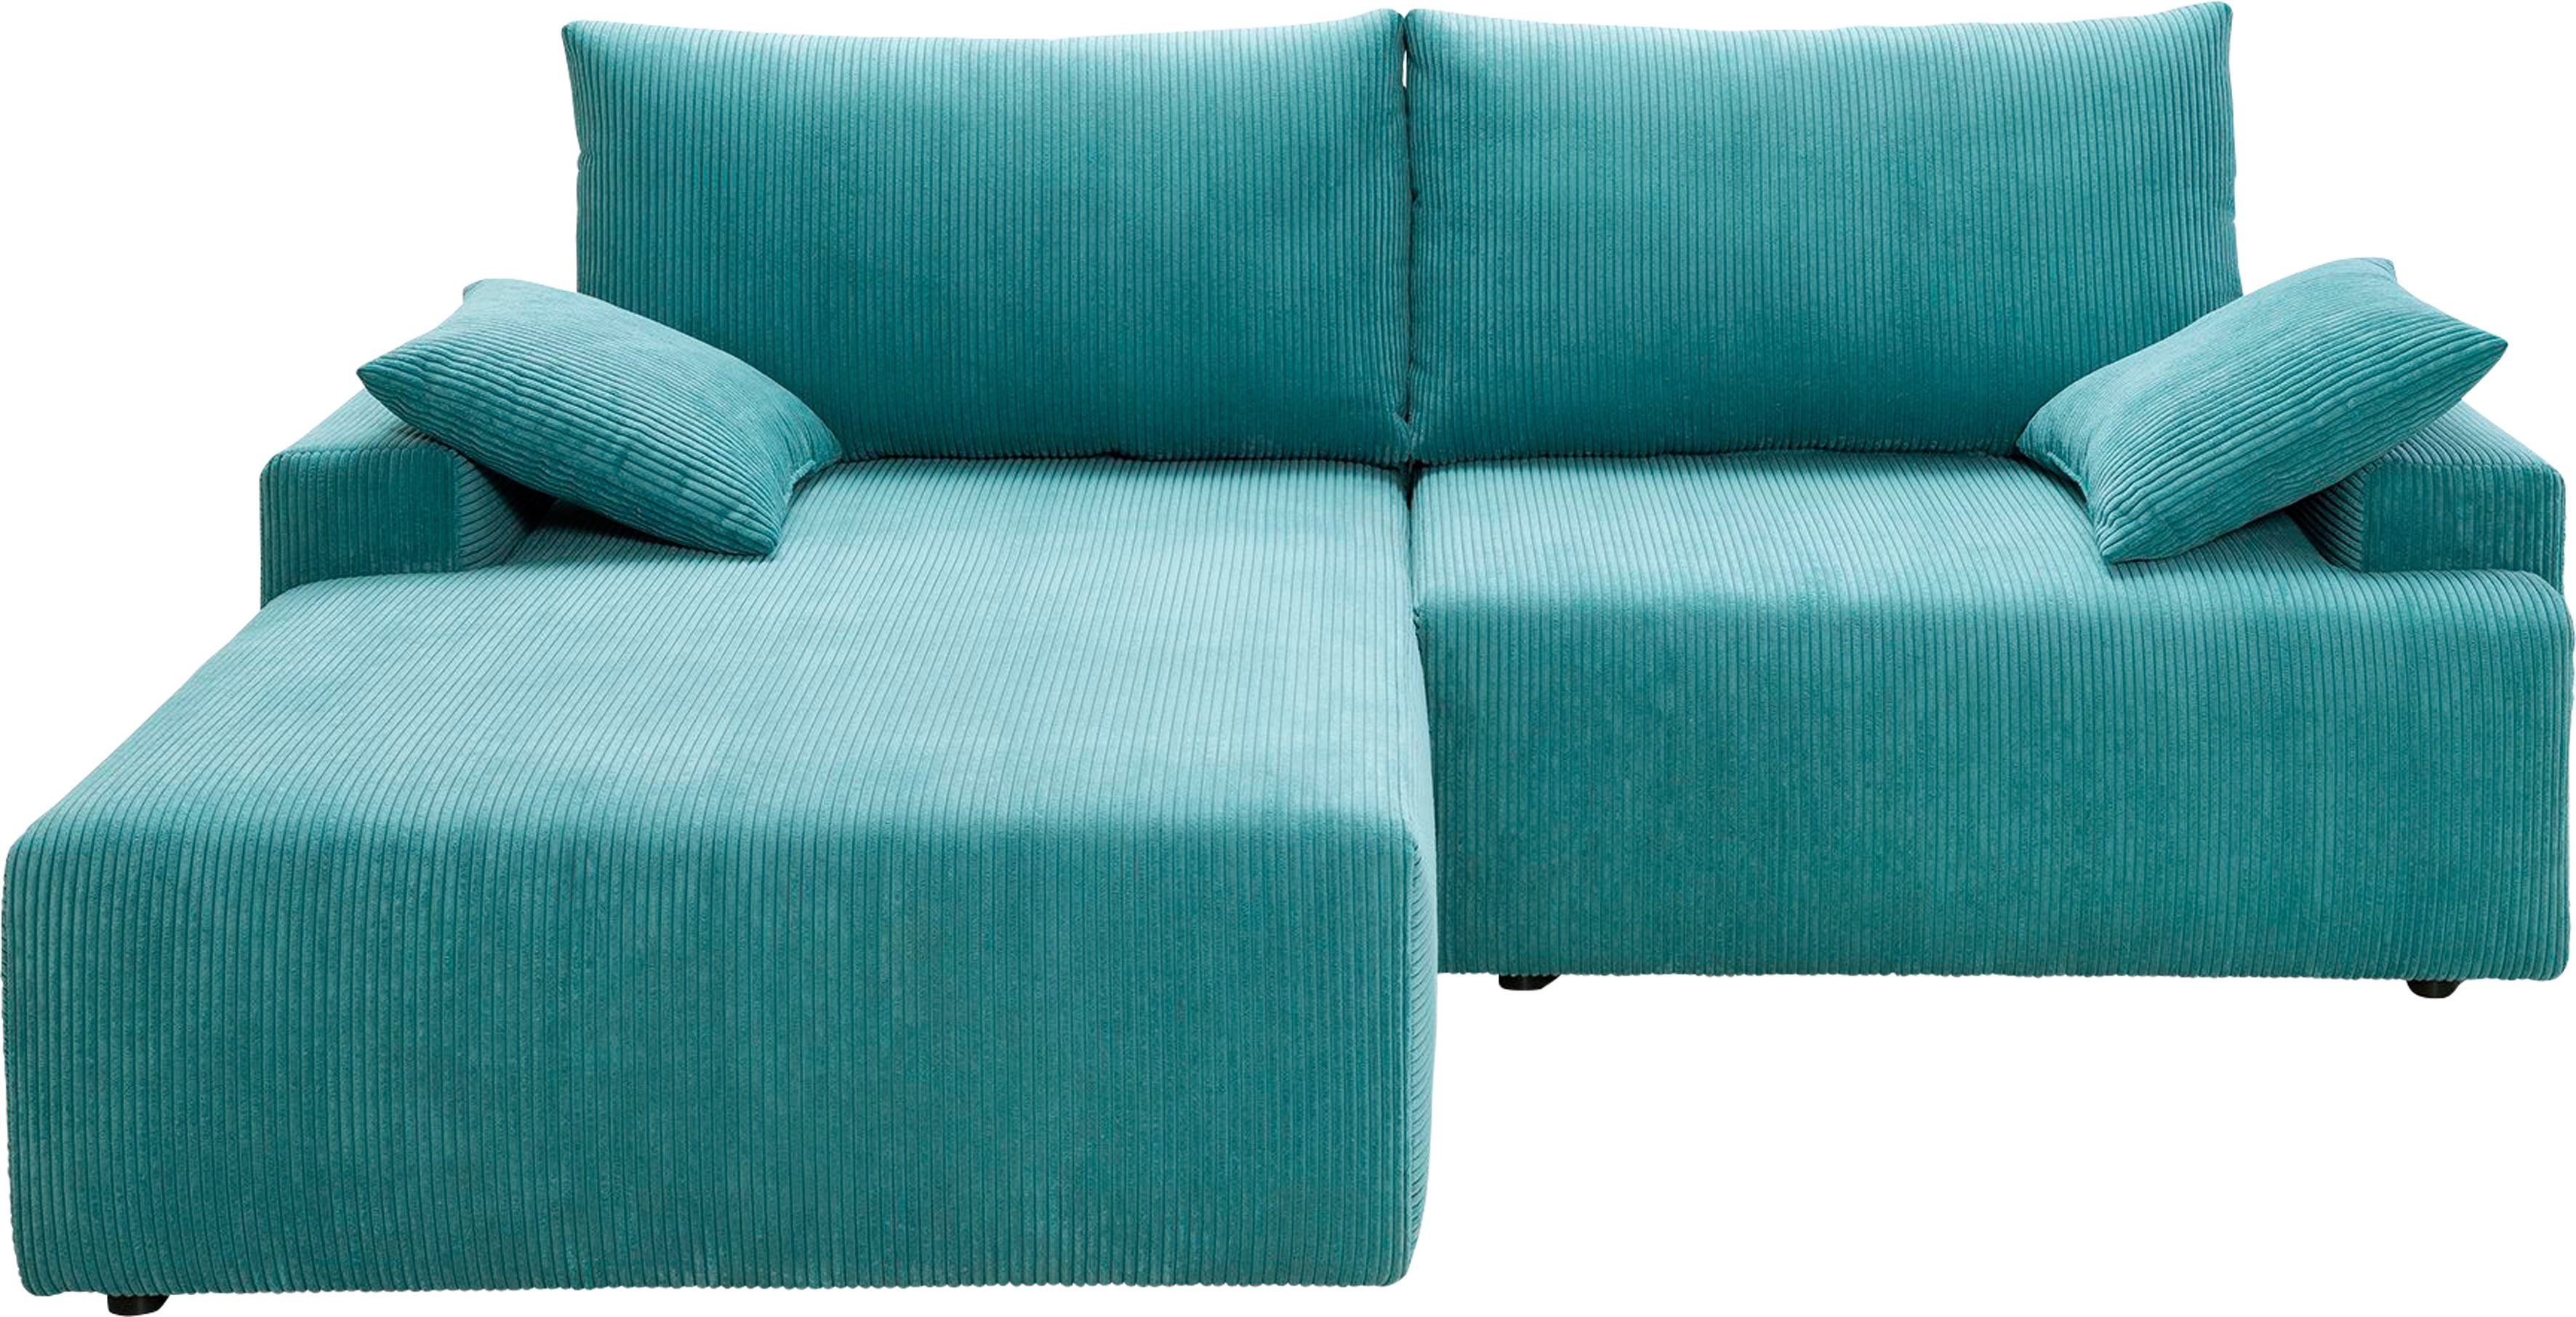 Ecksofa Orinoko, exxpo Bettkasten sky und inklusive Cord-Farben - in fashion Bettfunktion verschiedenen sofa